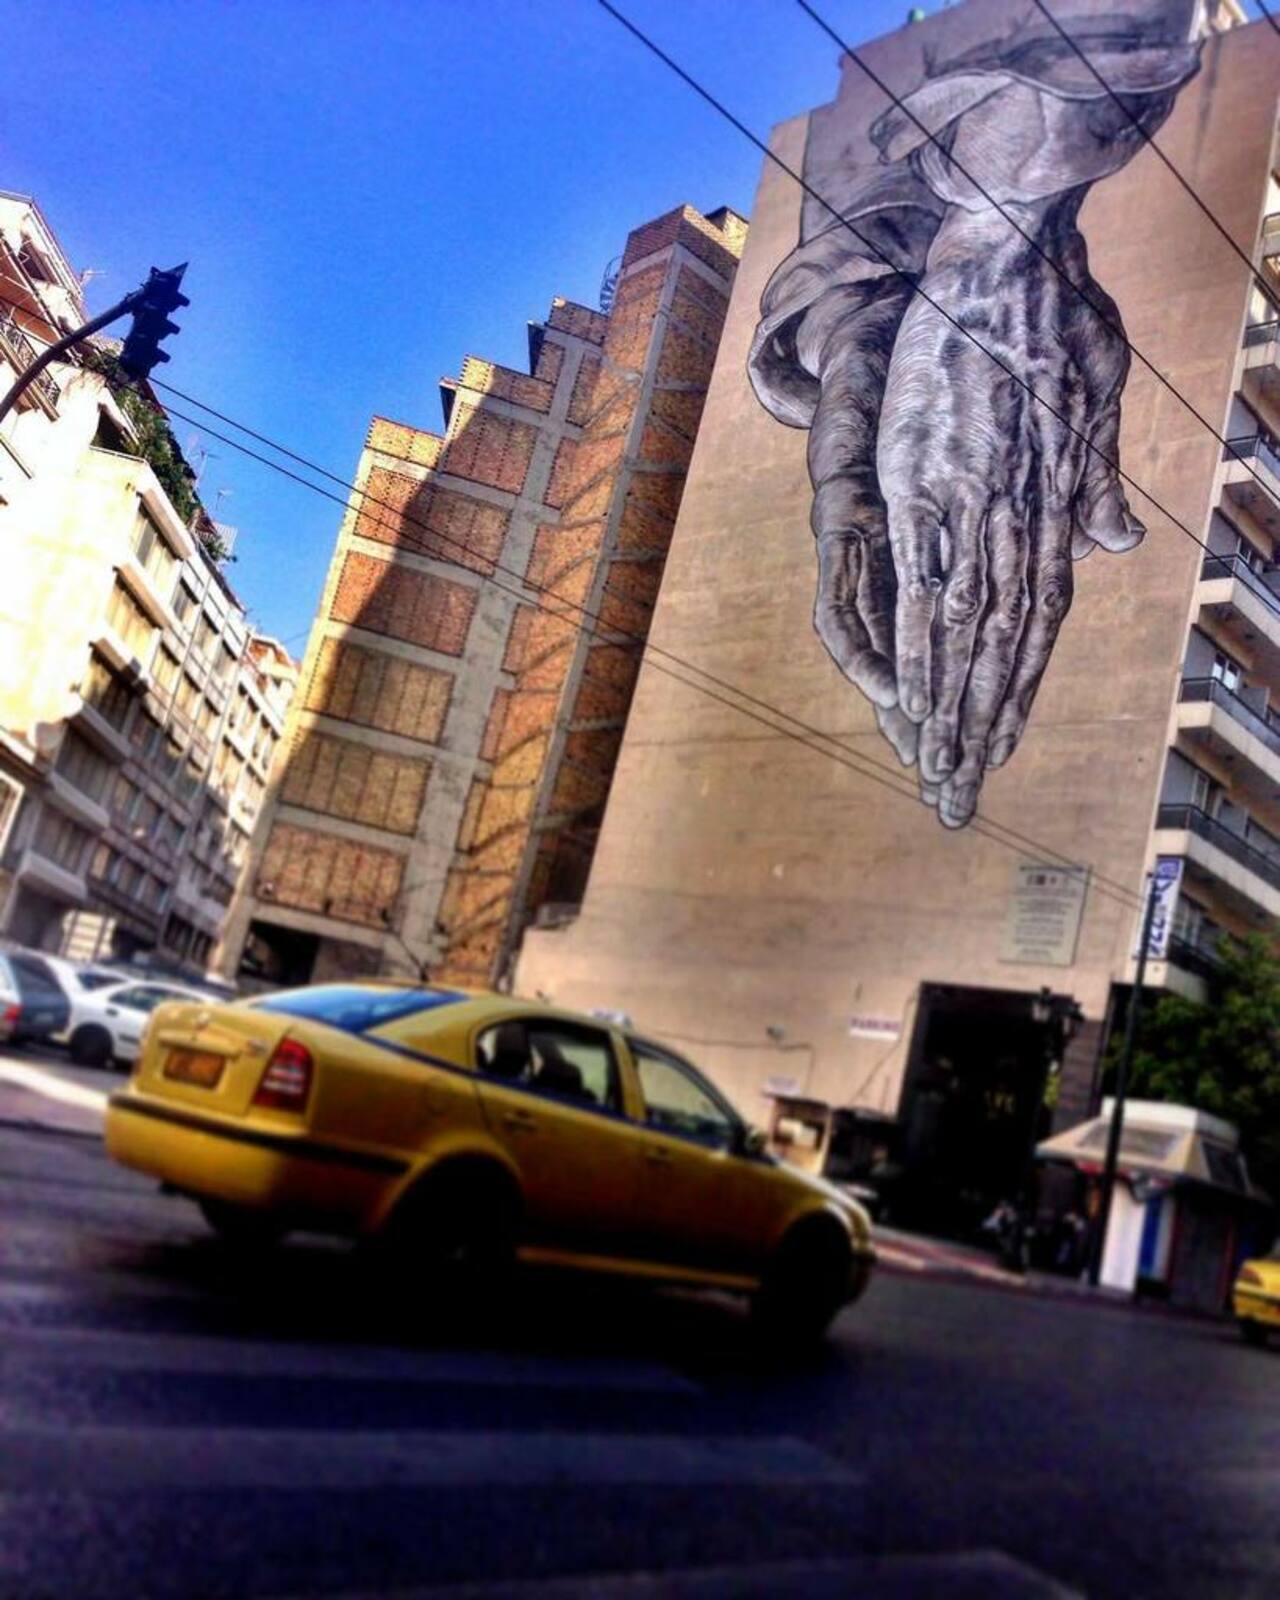 Good bye Athens / αντίο Αθήνα #Athens #psiri #streetart #graffiti #graff by _quentin__ http://ift.tt/1Ohu5pF http://t.co/ooiRC0fD9f